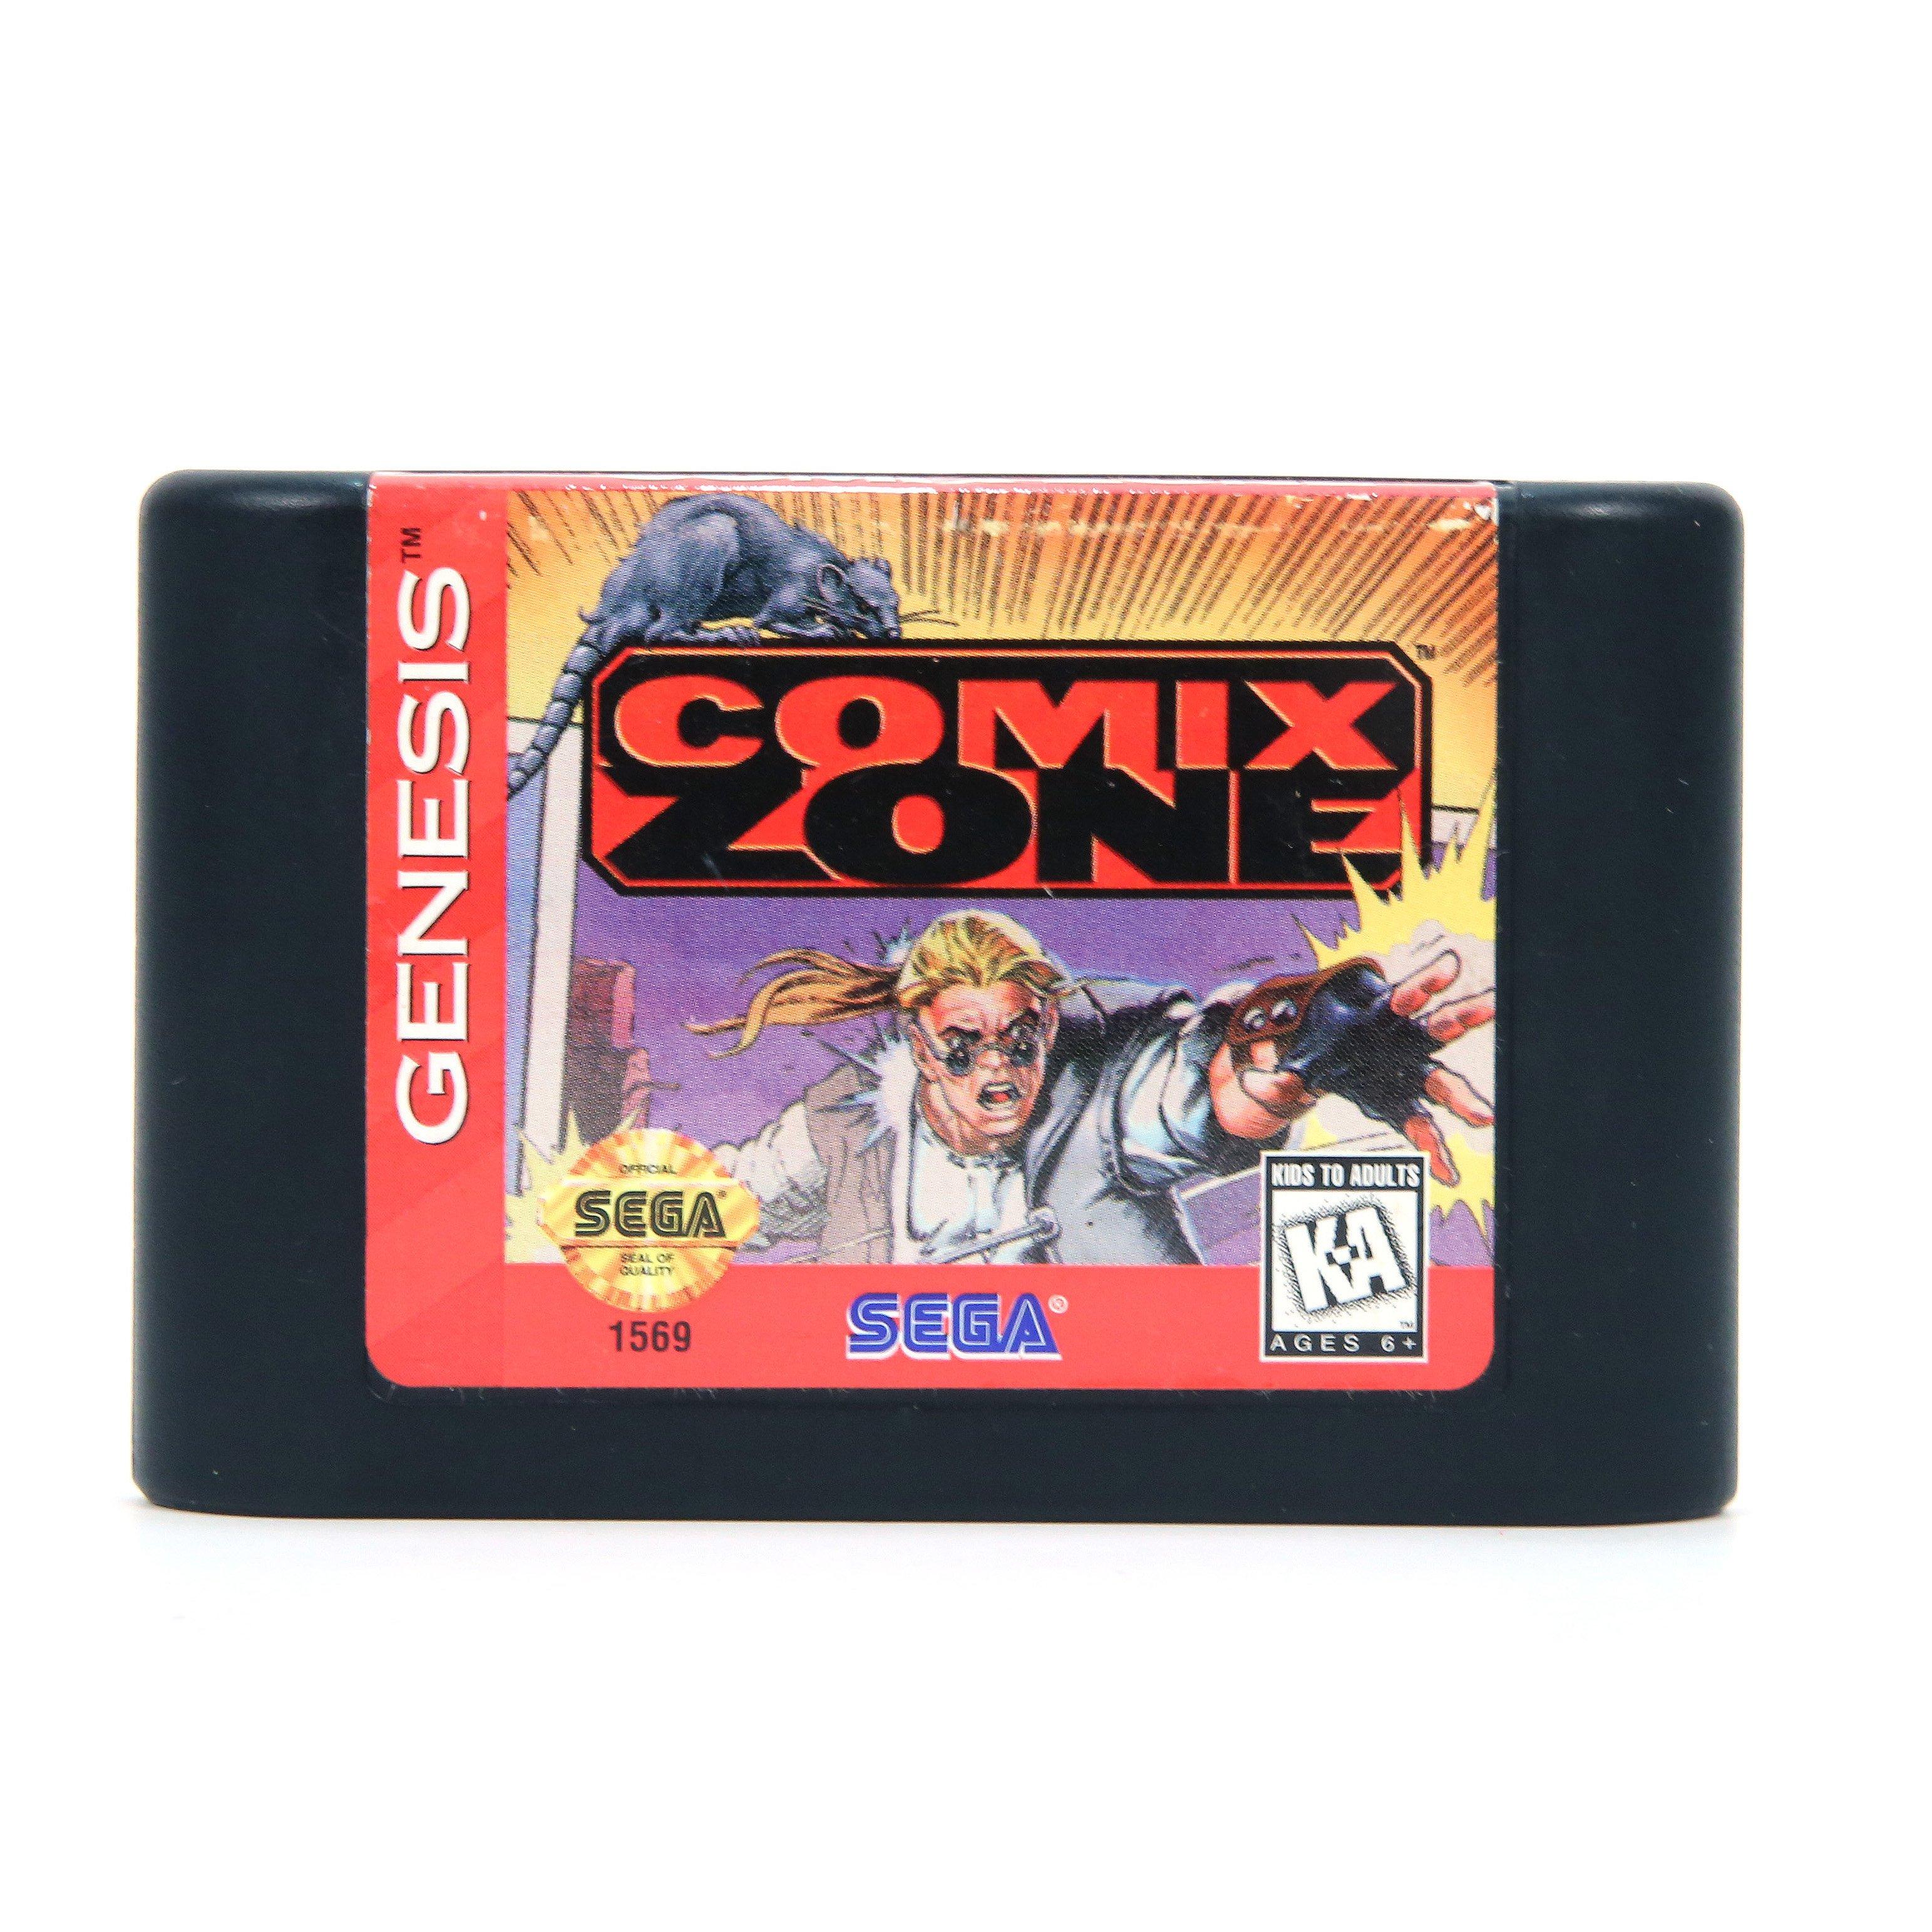 Comix Zone - Sega Genesis